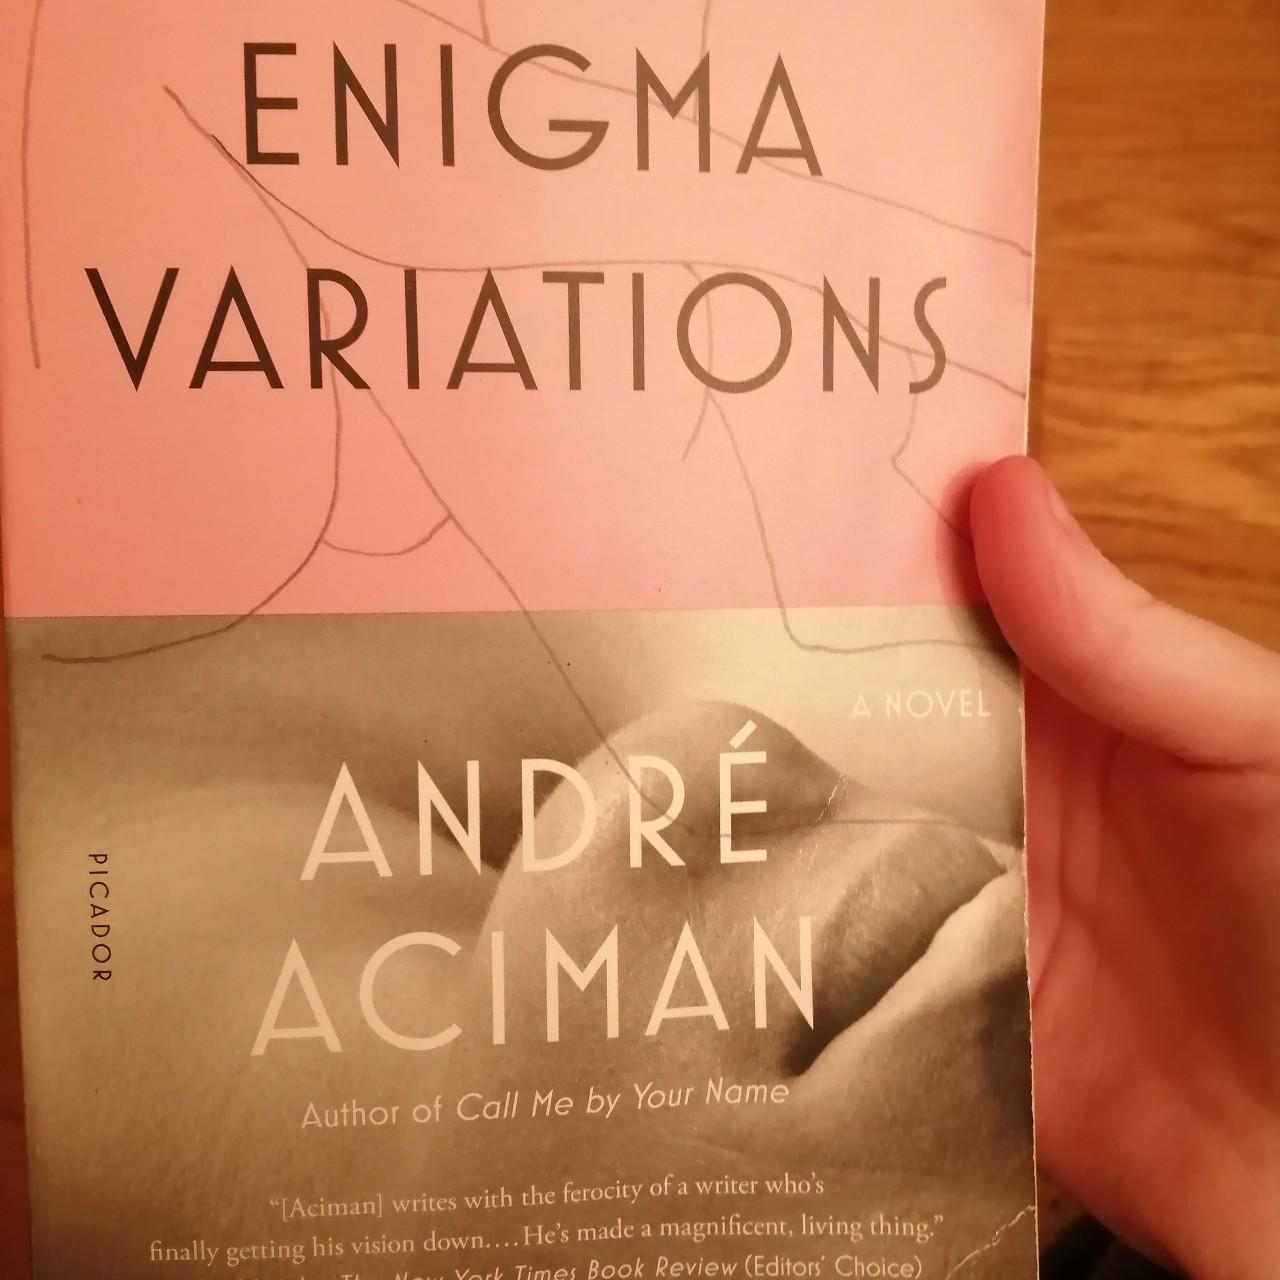 Enigma Variations: A Novel